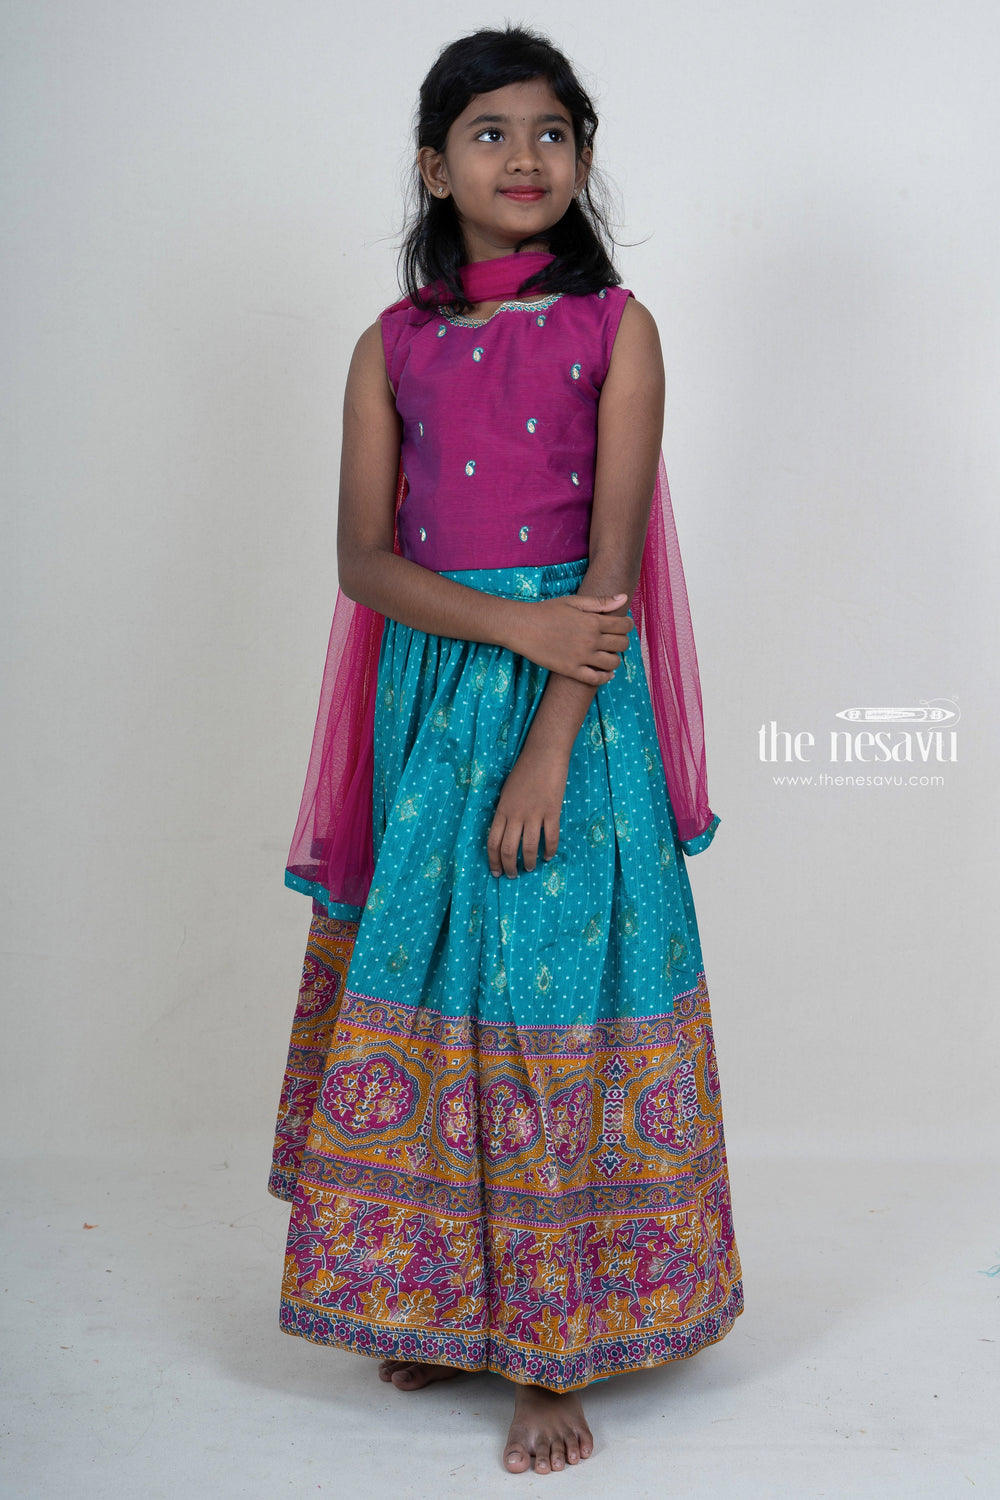 The Nesavu Lehenga & Ghagra Blue With Purple Printed Silk Lehenga For Girls With Embellishments psr silks Nesavu